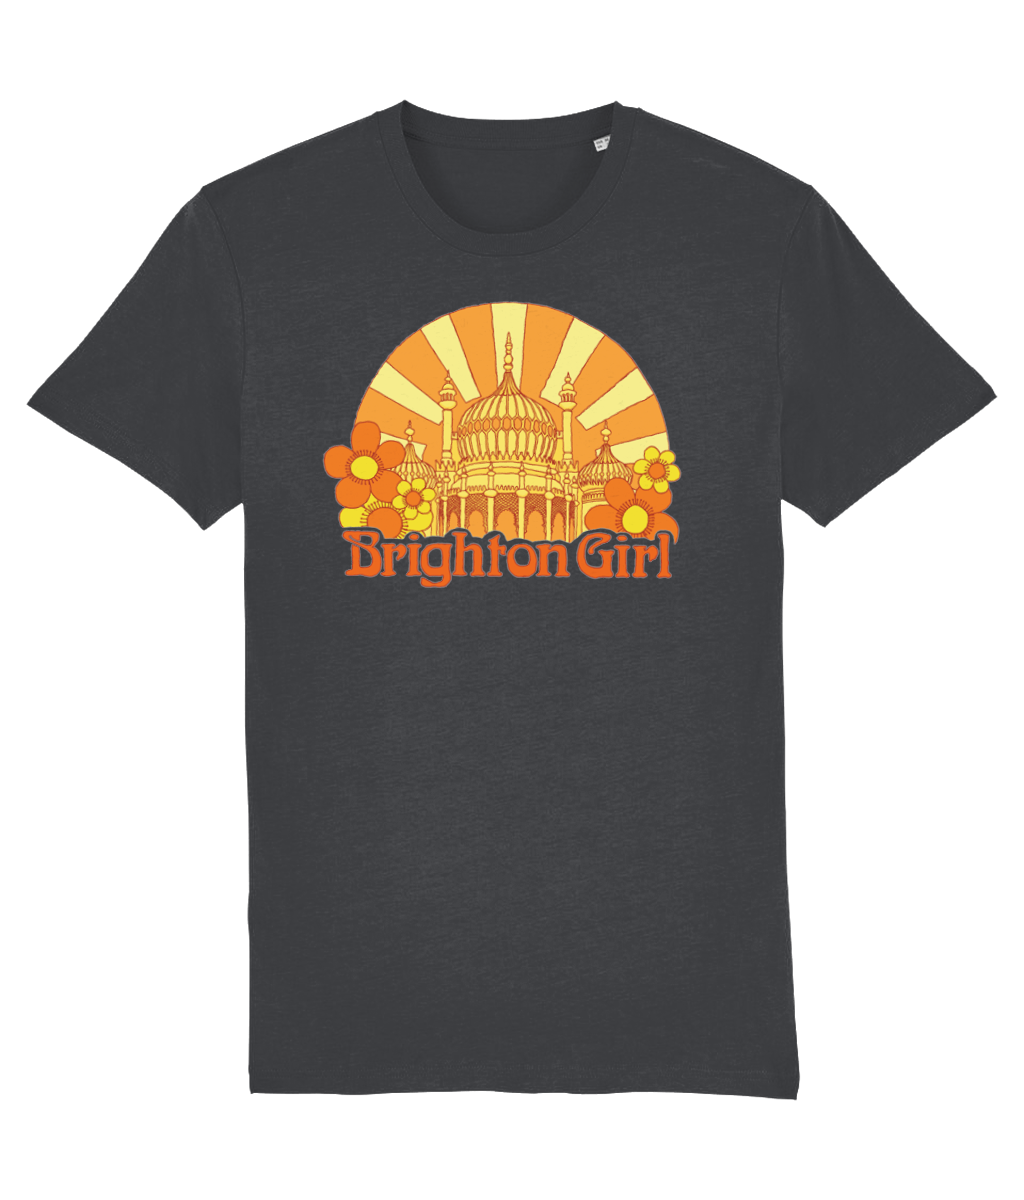 Brighton Girl Teeshirt - Laura Backeberg design (Adult Size)